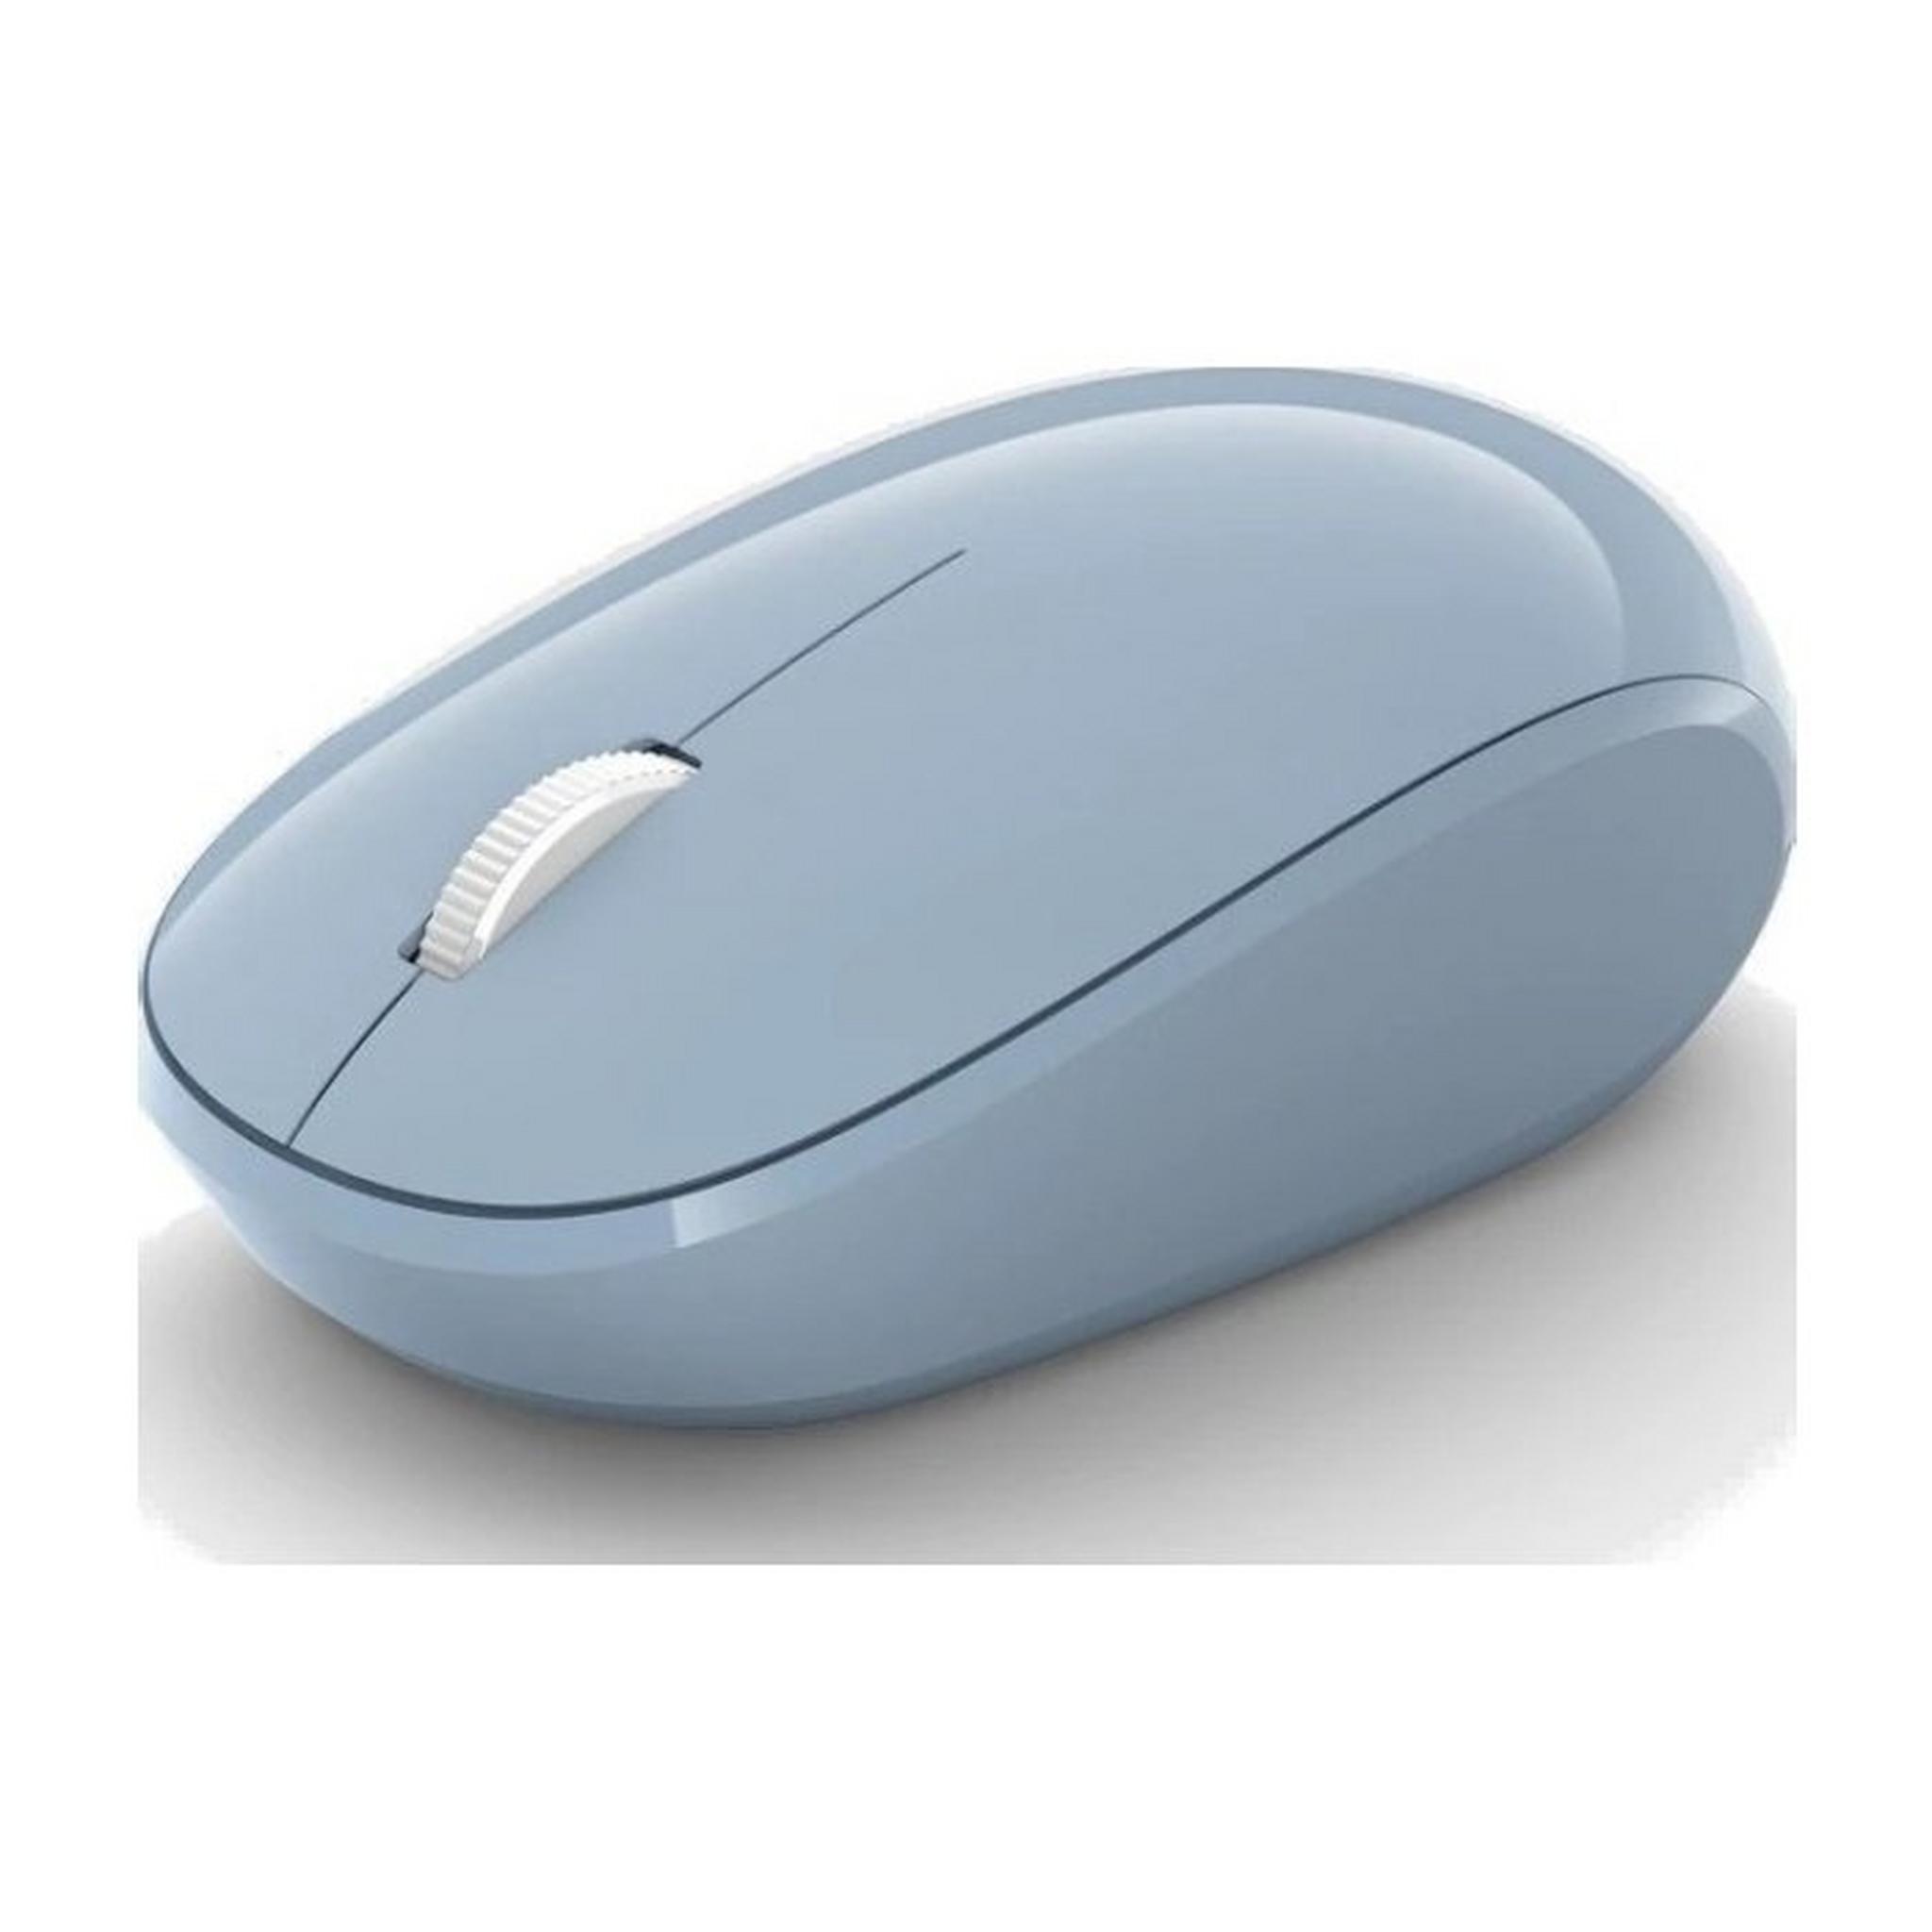 Microsoft Wireless Bluetooth Mouse - Blue